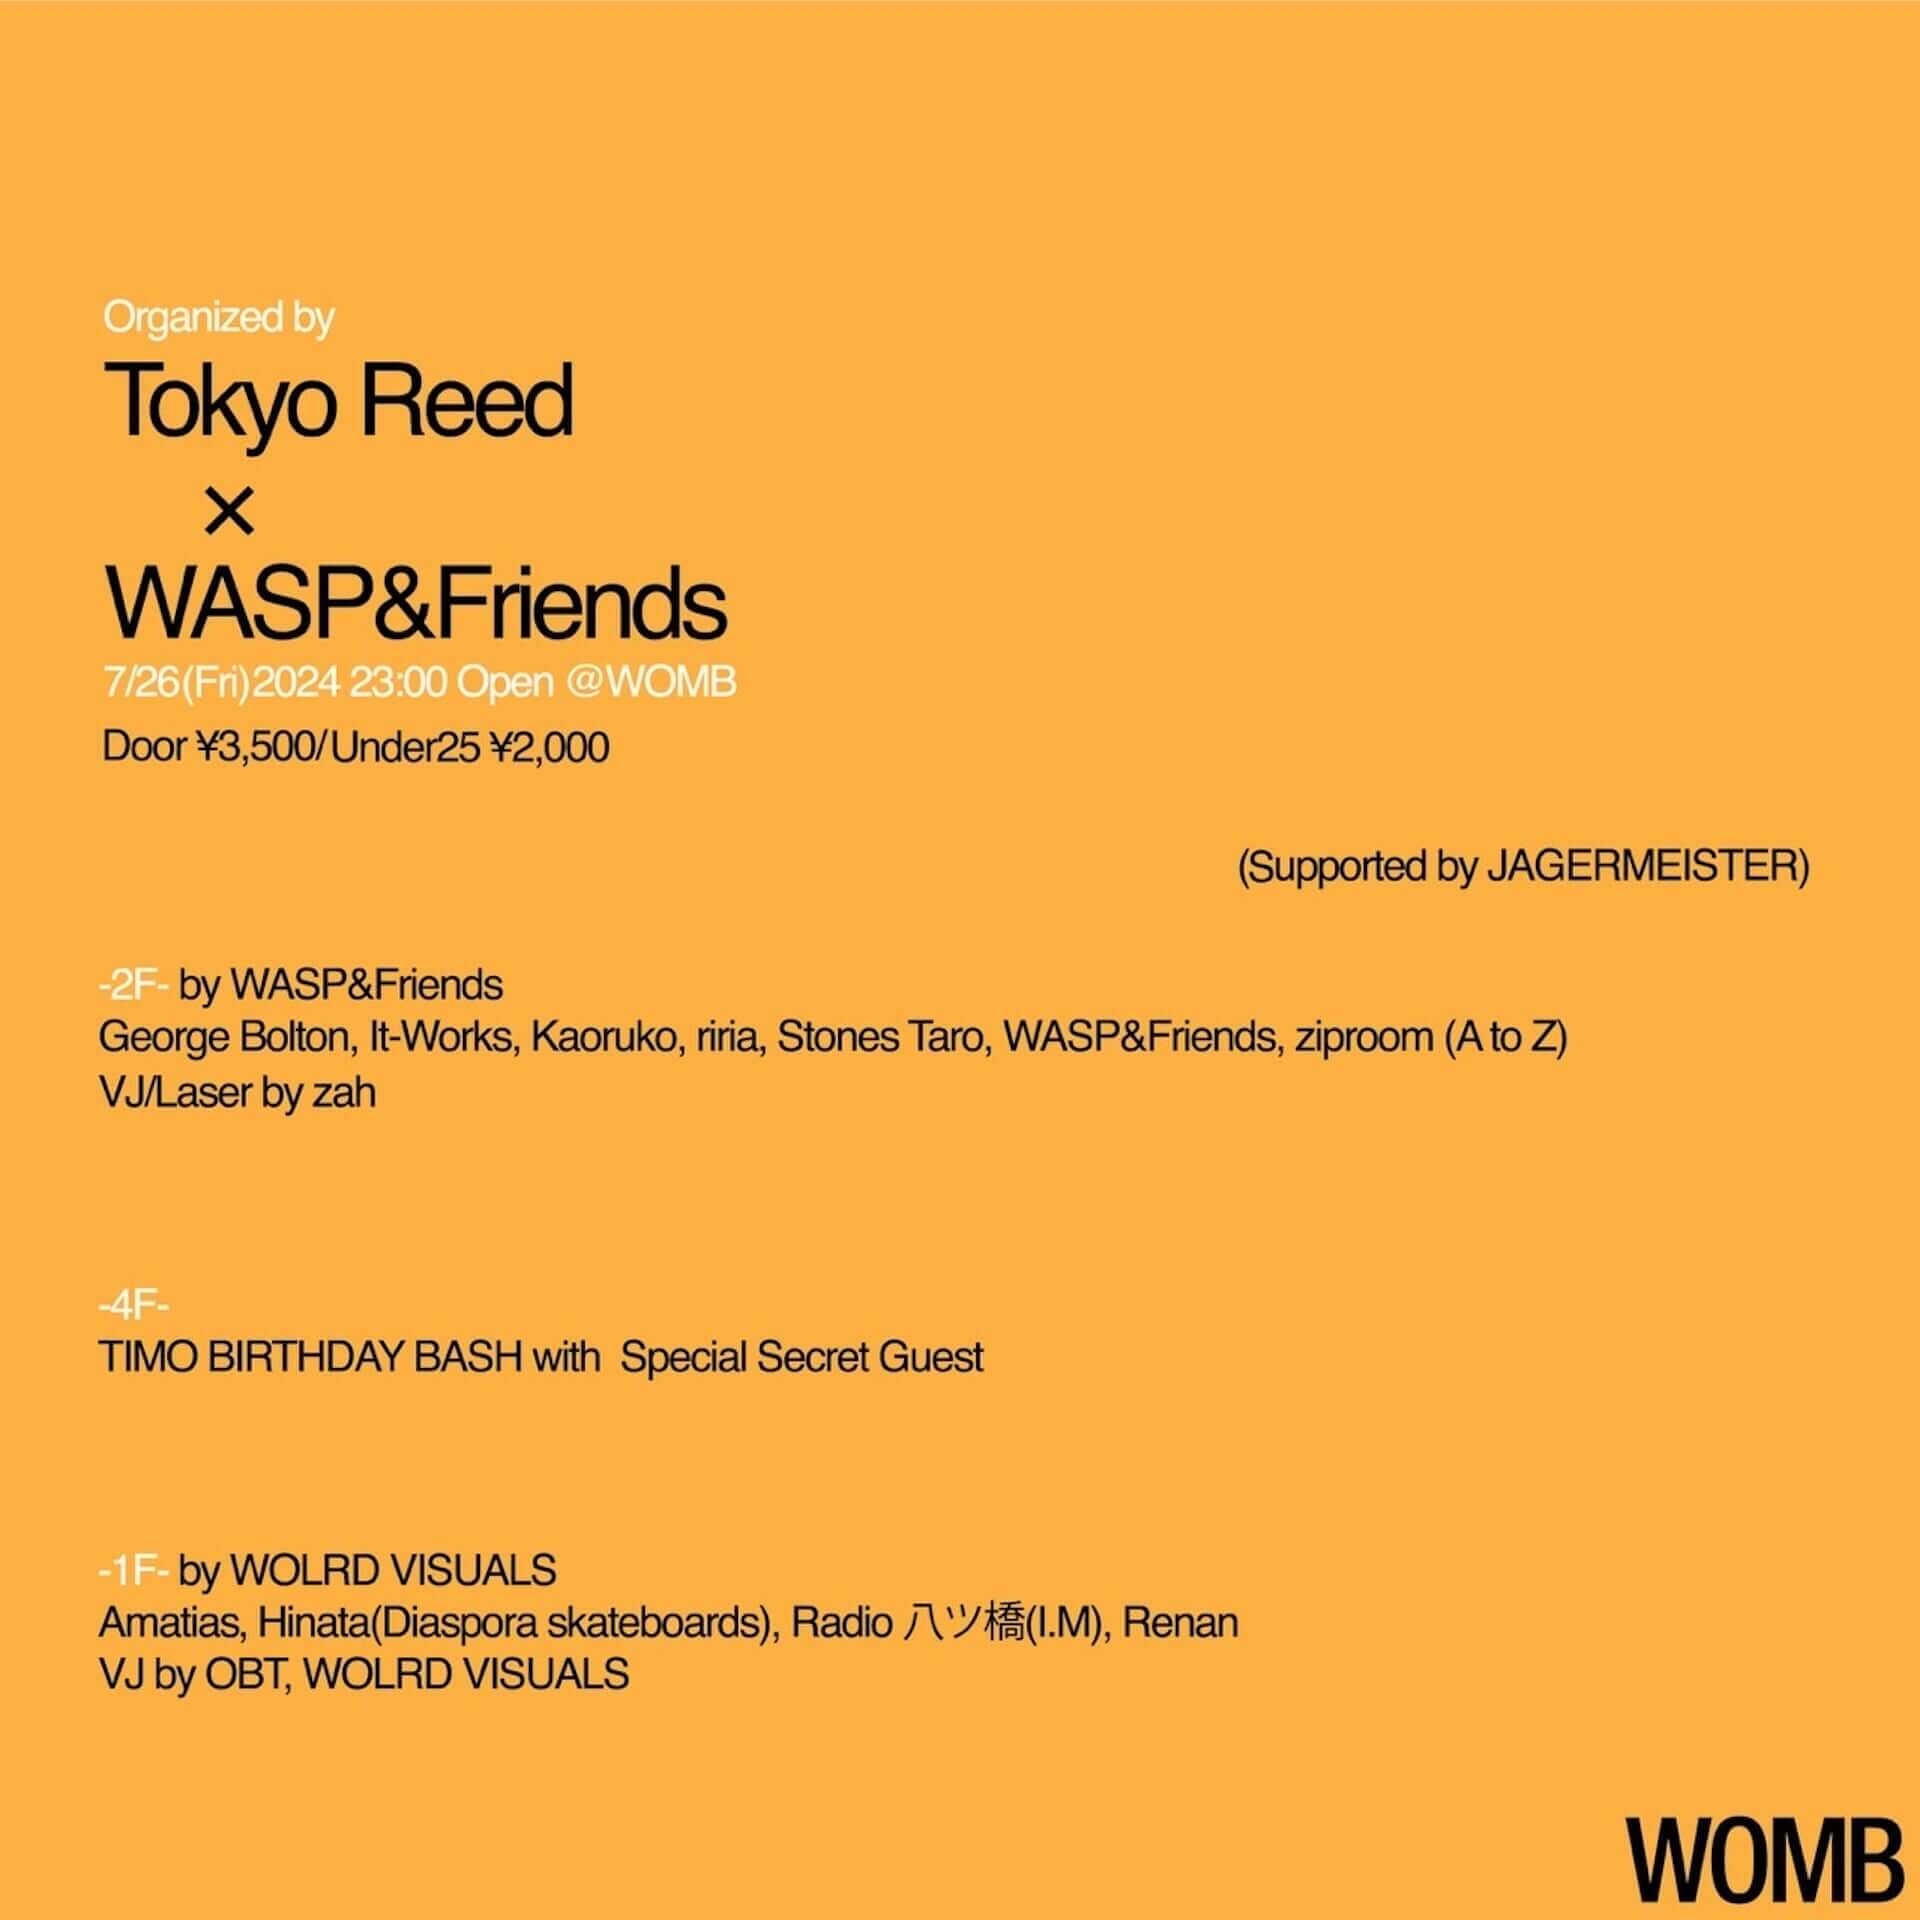 Tokyo Reed×WASP&FRIENDSのキュレーションパーティーが7/26(FRI)にWOMBで開催 0ac817c95c0de9b3915ddfb0c923157e-1920x1920